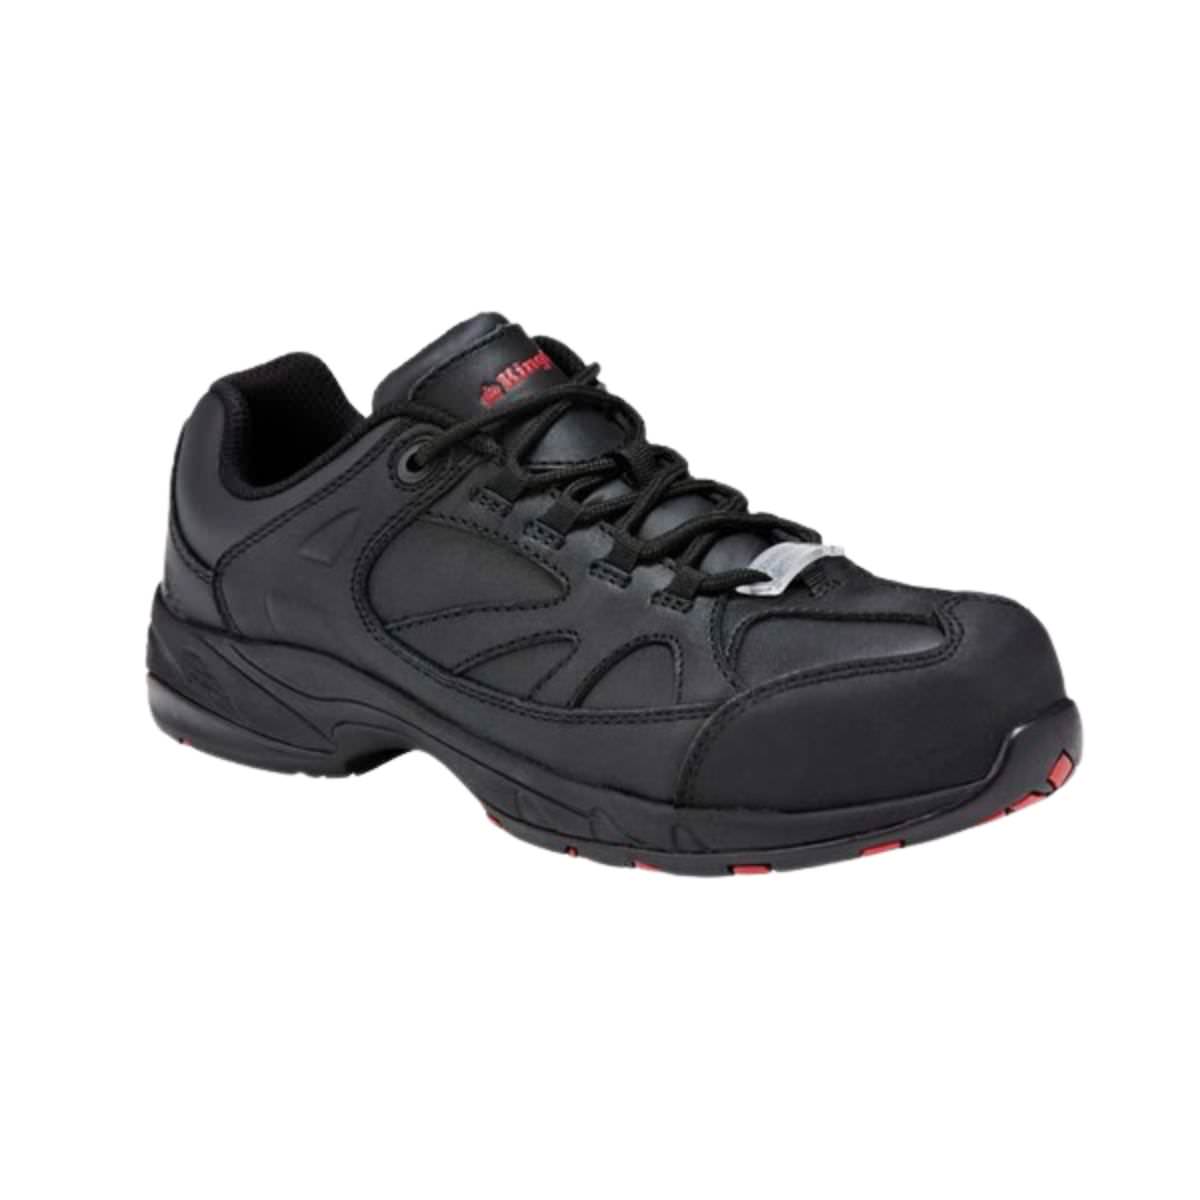 KingGee Women's Comp-Tec G7 Slip Resistant Steel Toe Safety Shoes - Black K26610